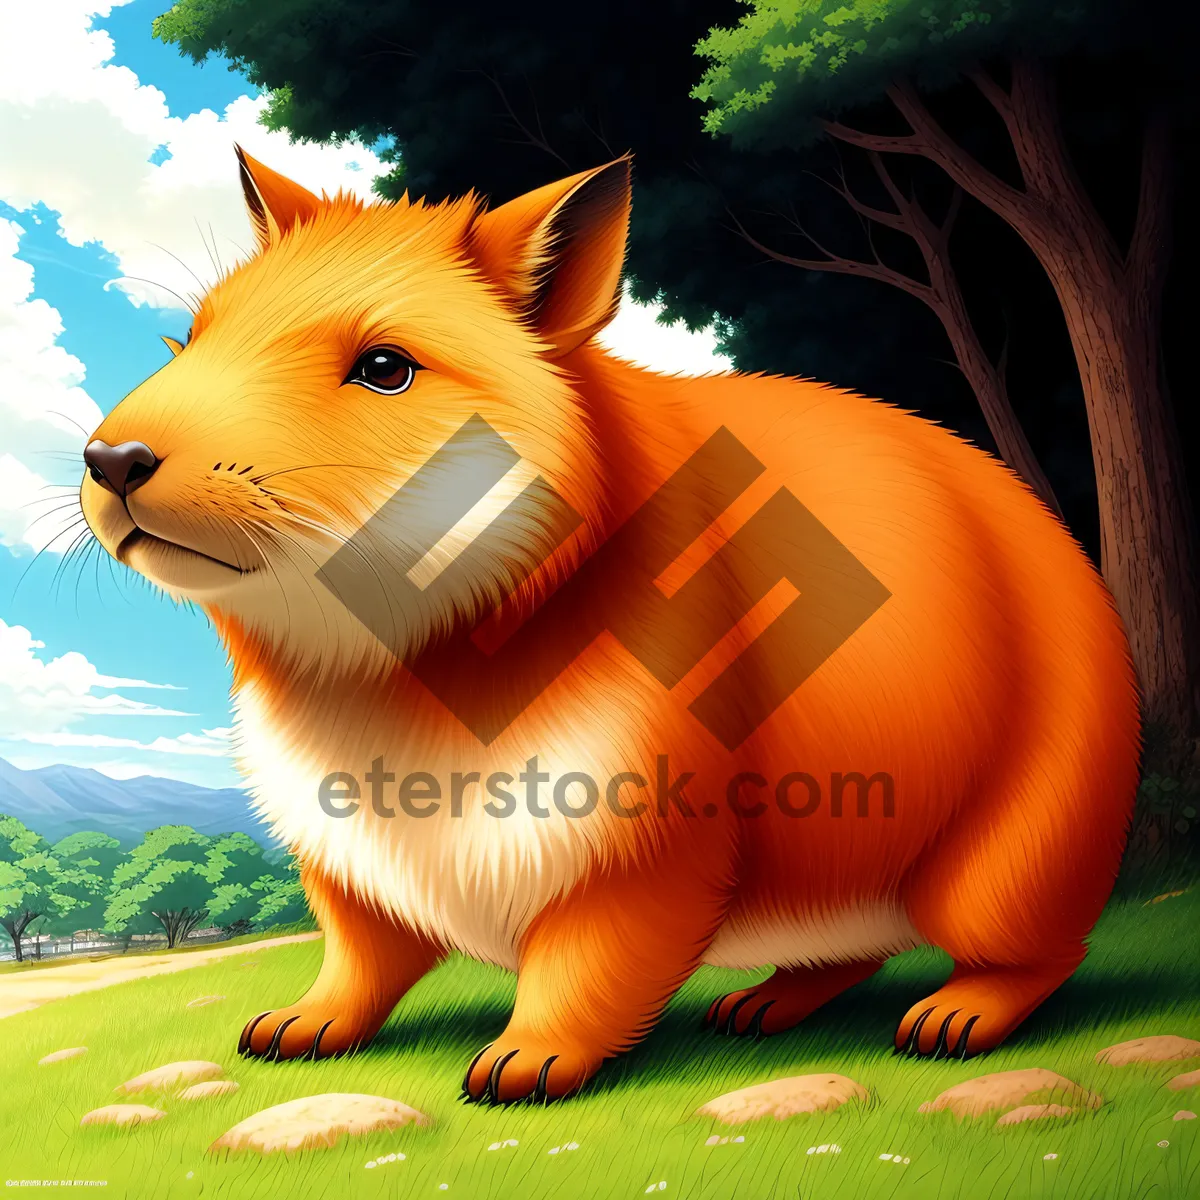 Picture of Furry Friend on Grass: Cute Guinea Pig Portrait